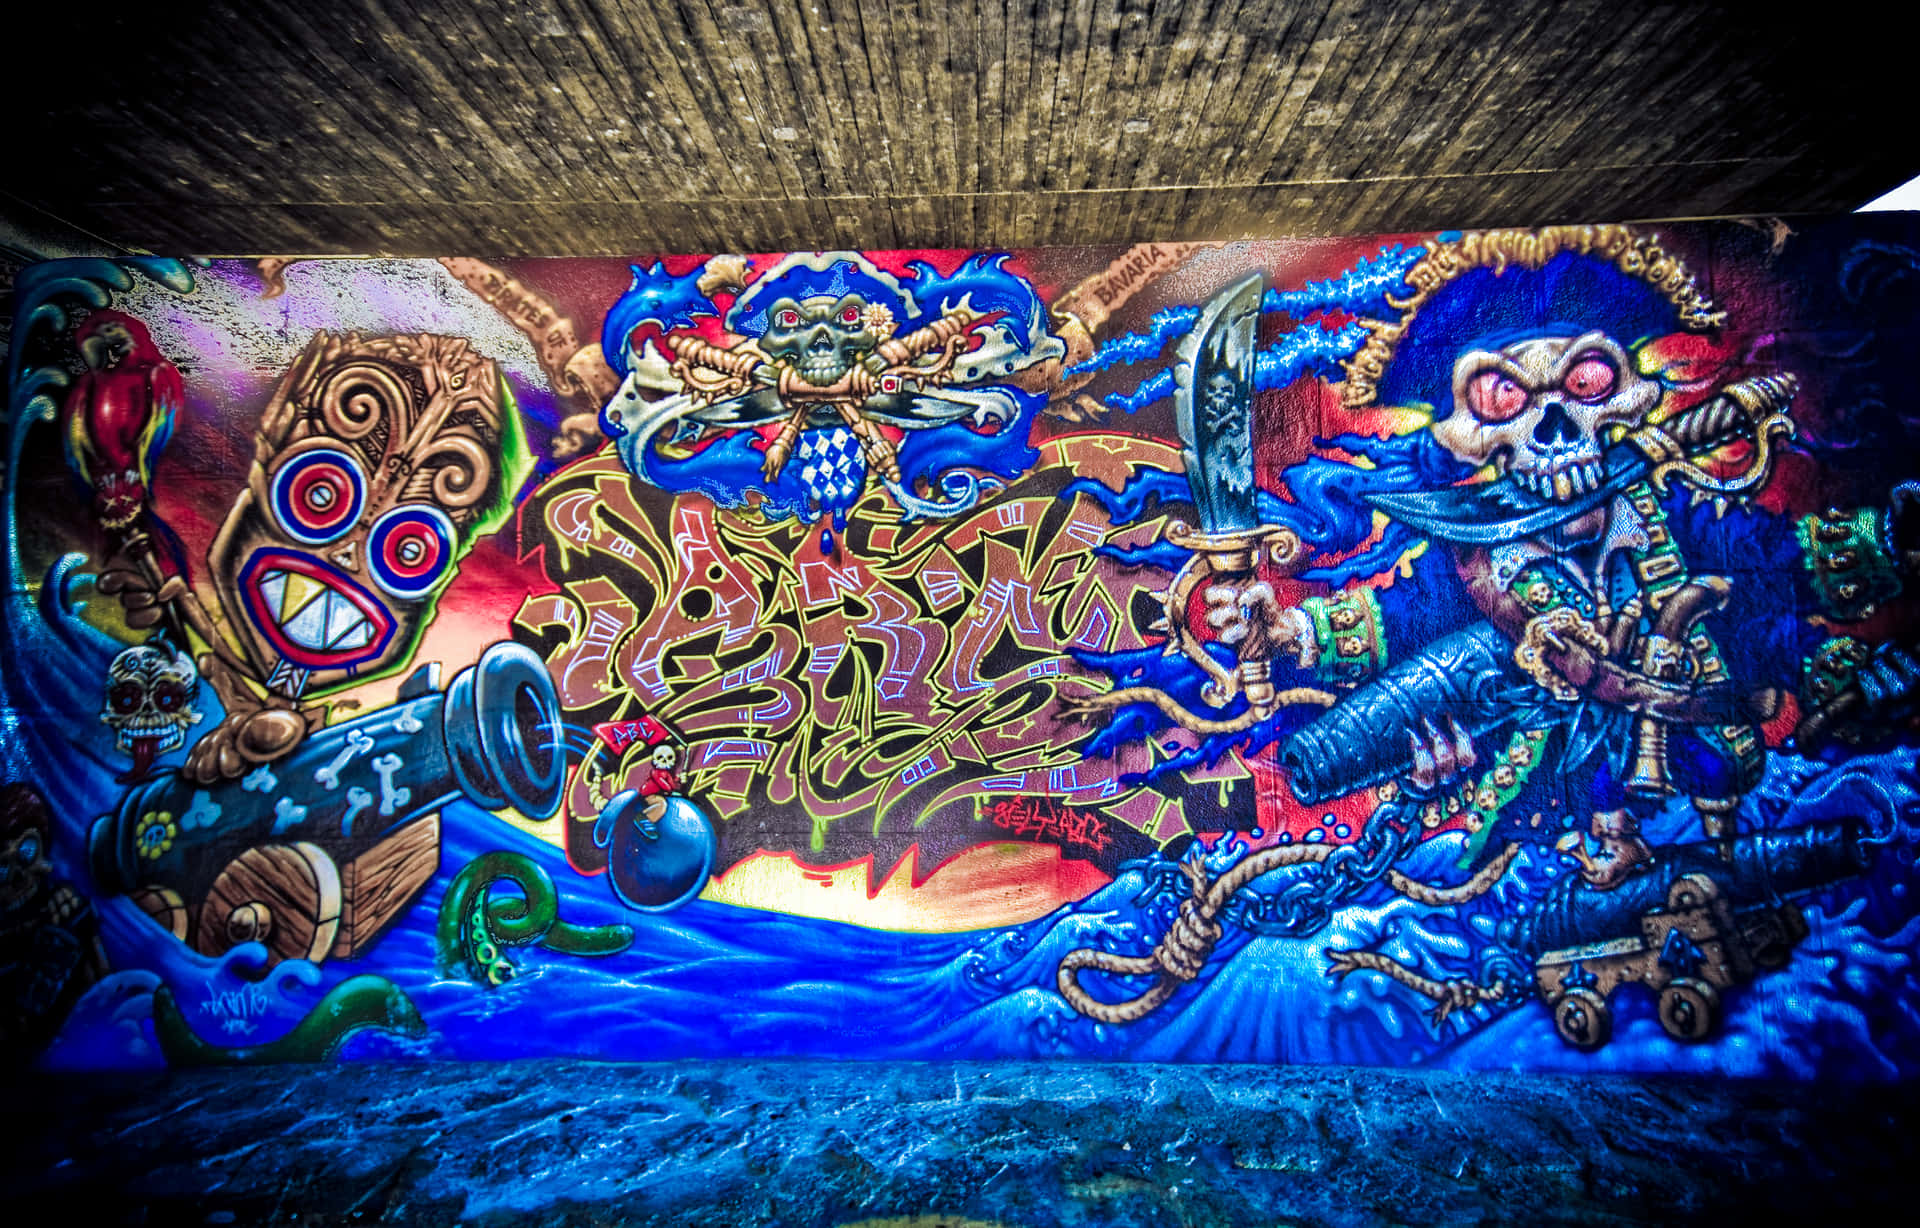 Hellleuchtende Graffiti-kunst In Städtischer Umgebung. Wallpaper